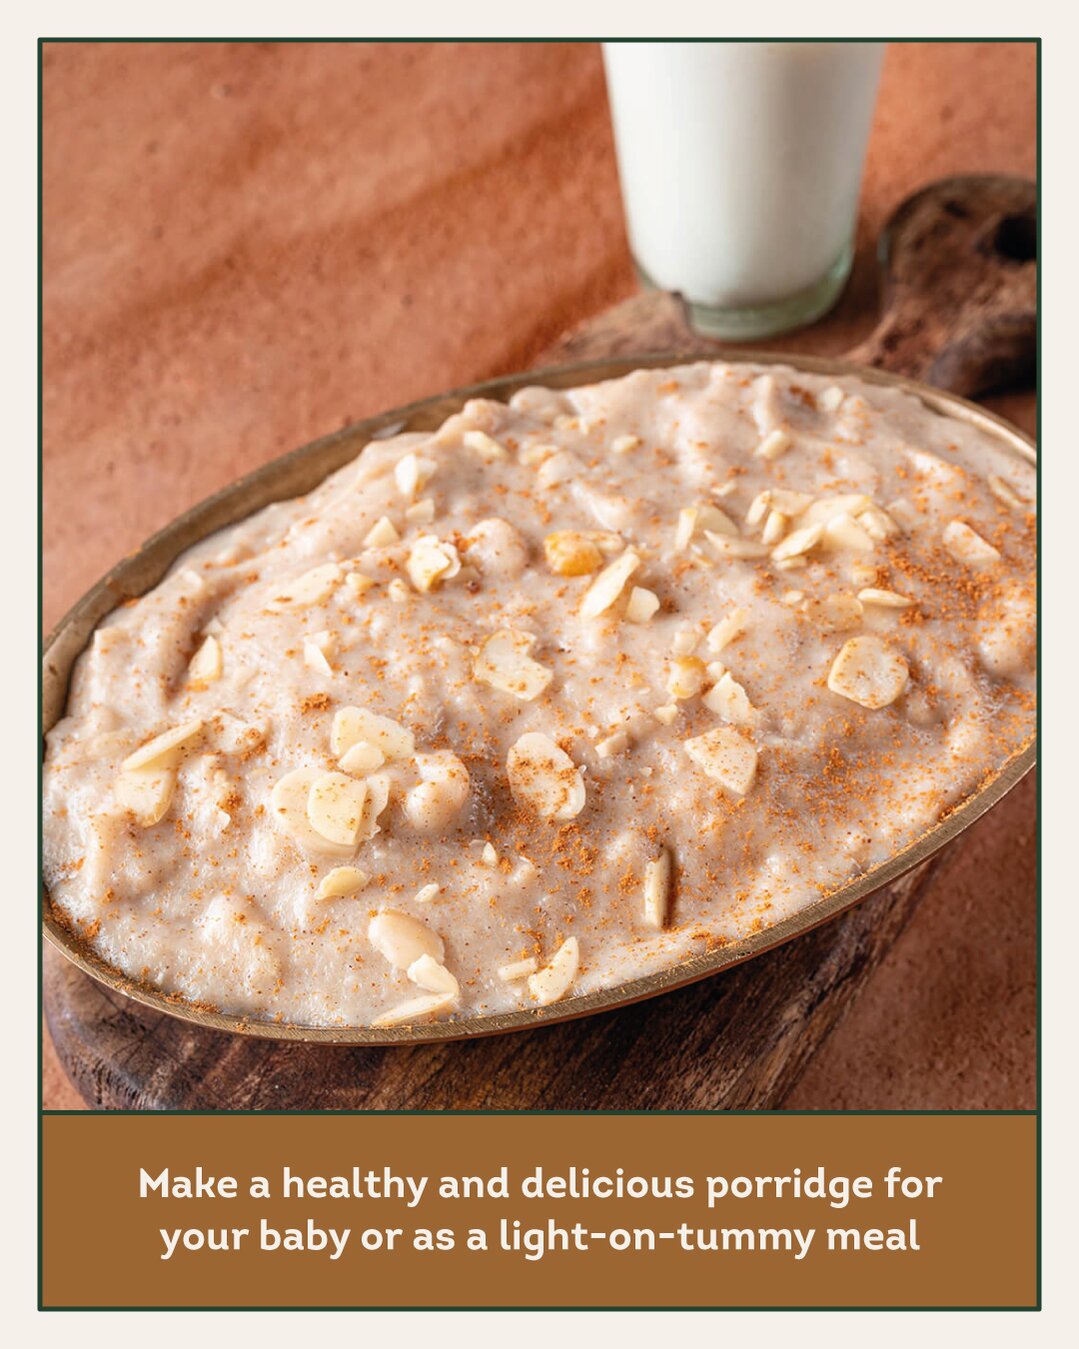 Aazol Bhardi: Traditional Healthy Porridge - 750g - hfnl!fe